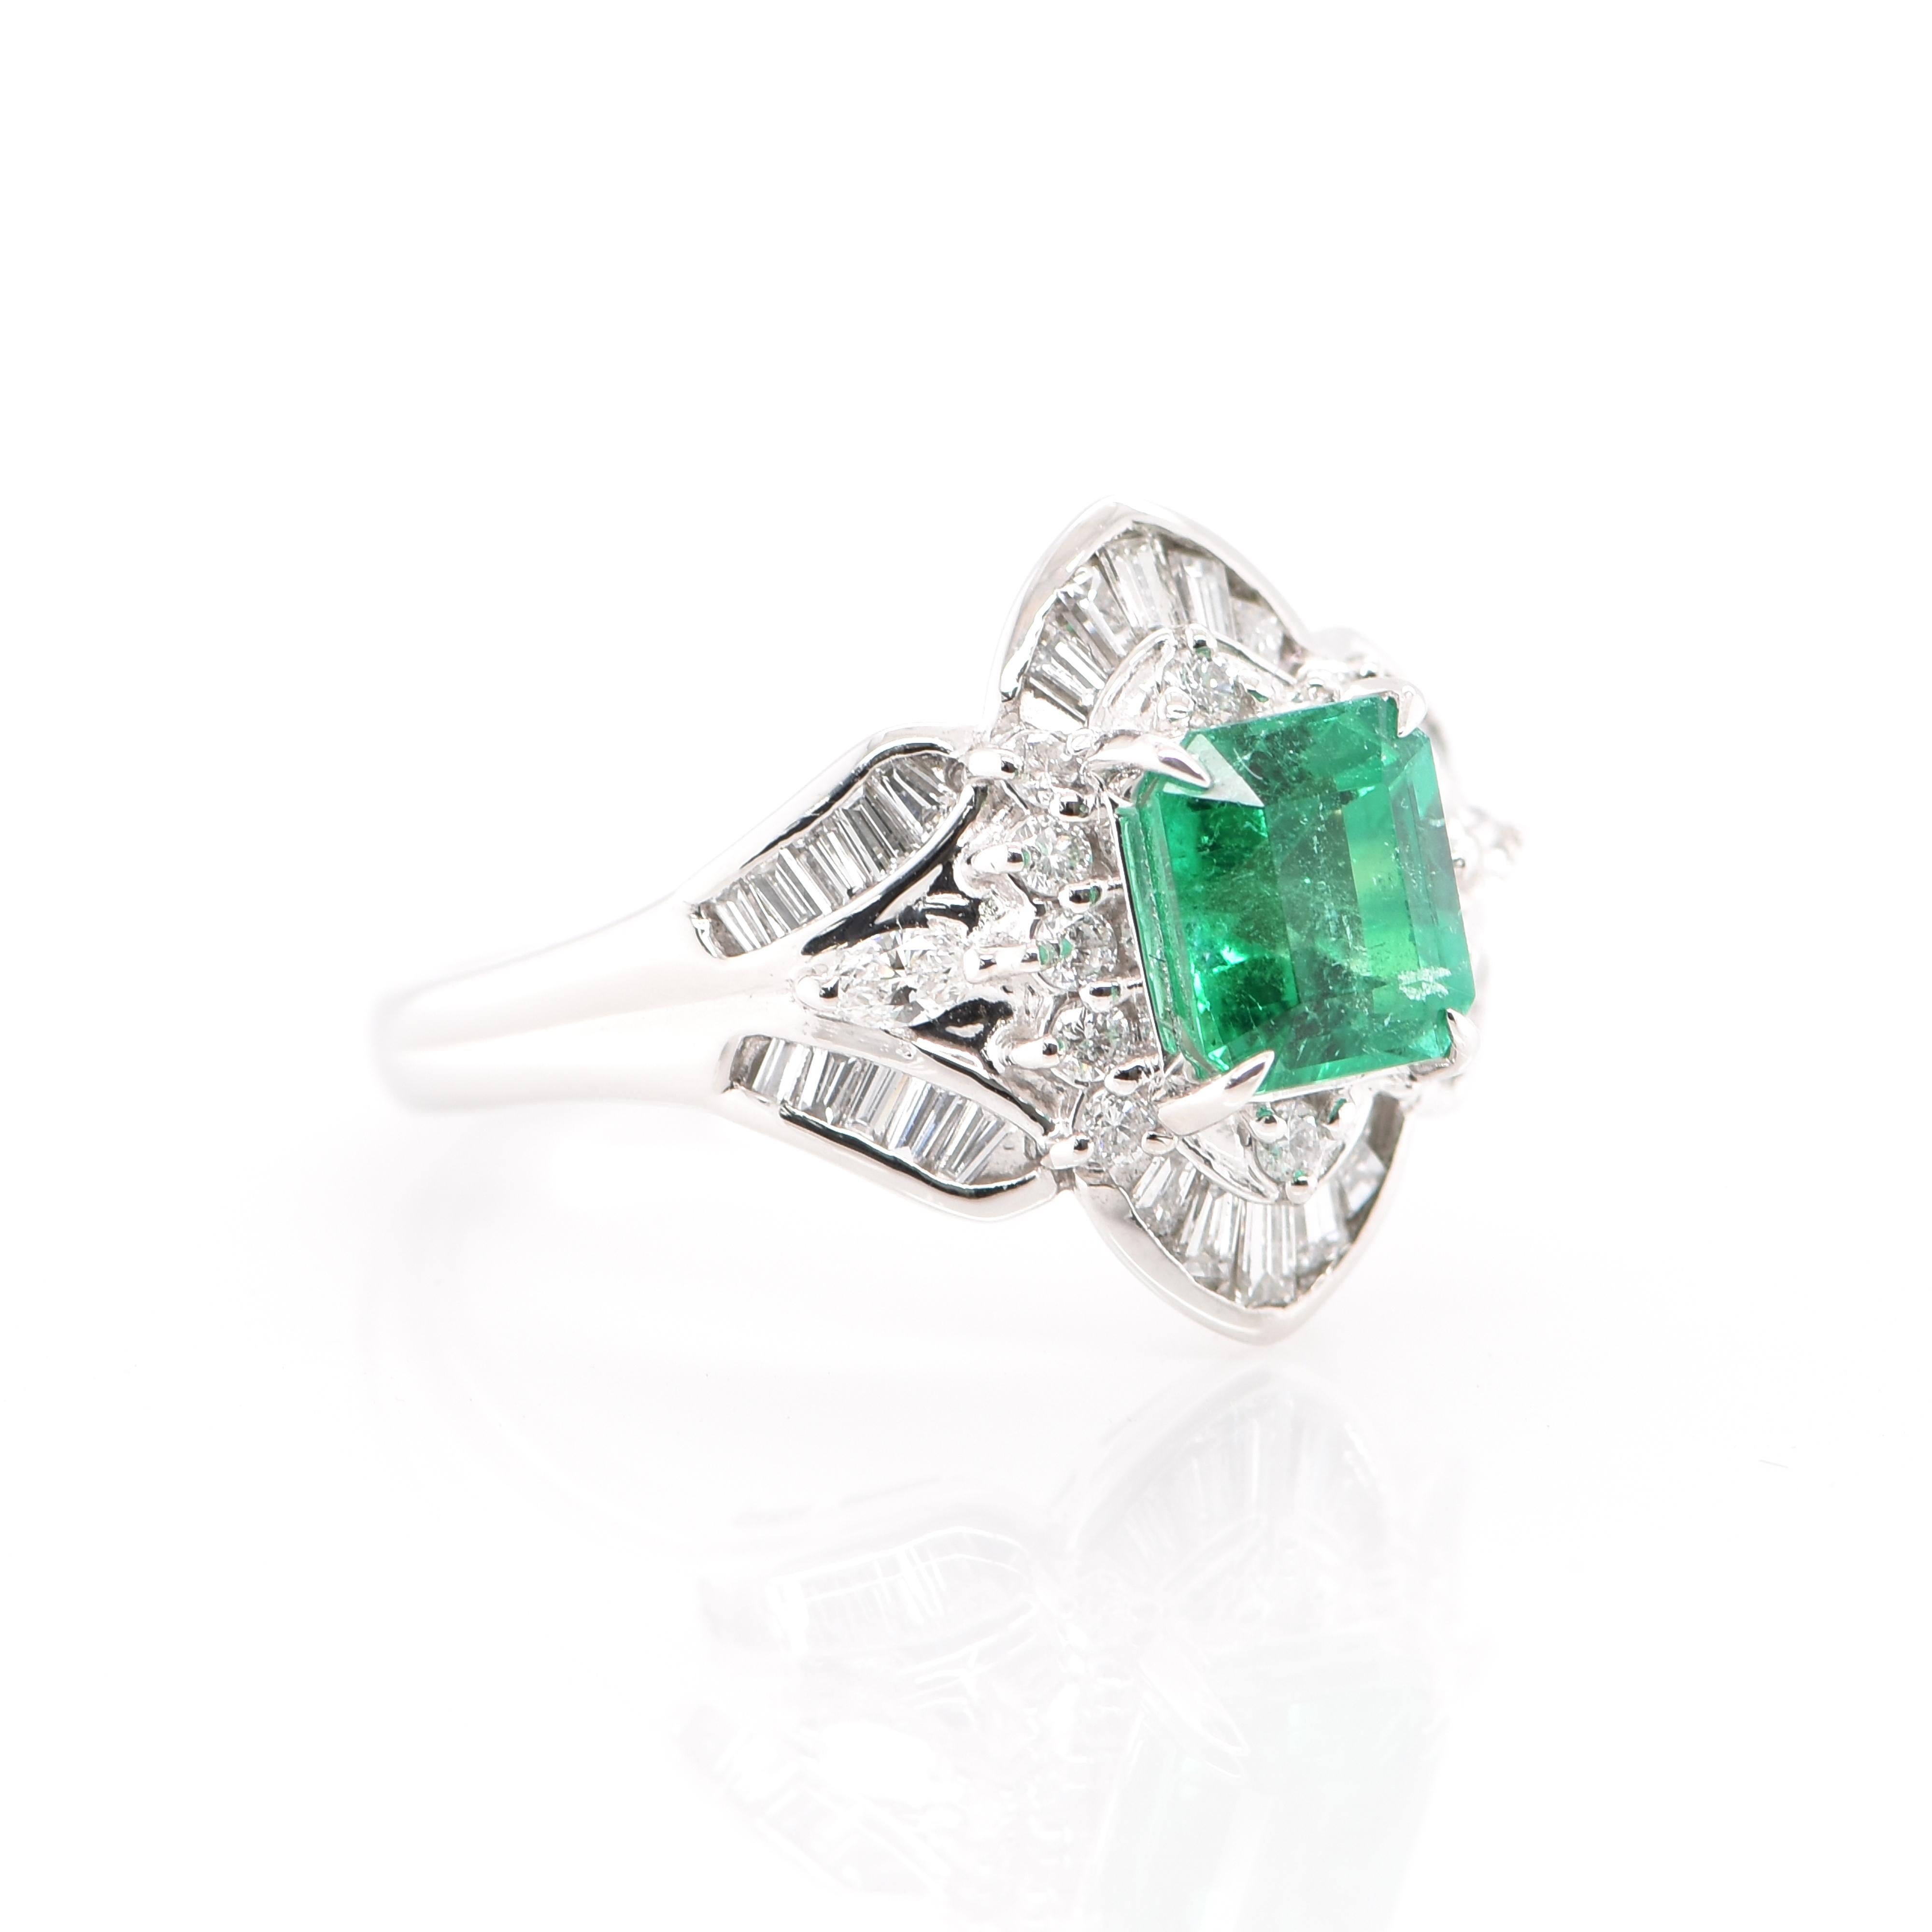 Emerald Cut Art Deco Style 1.44 Carat Emerald and Diamond Cocktail Ring Set in Platinum